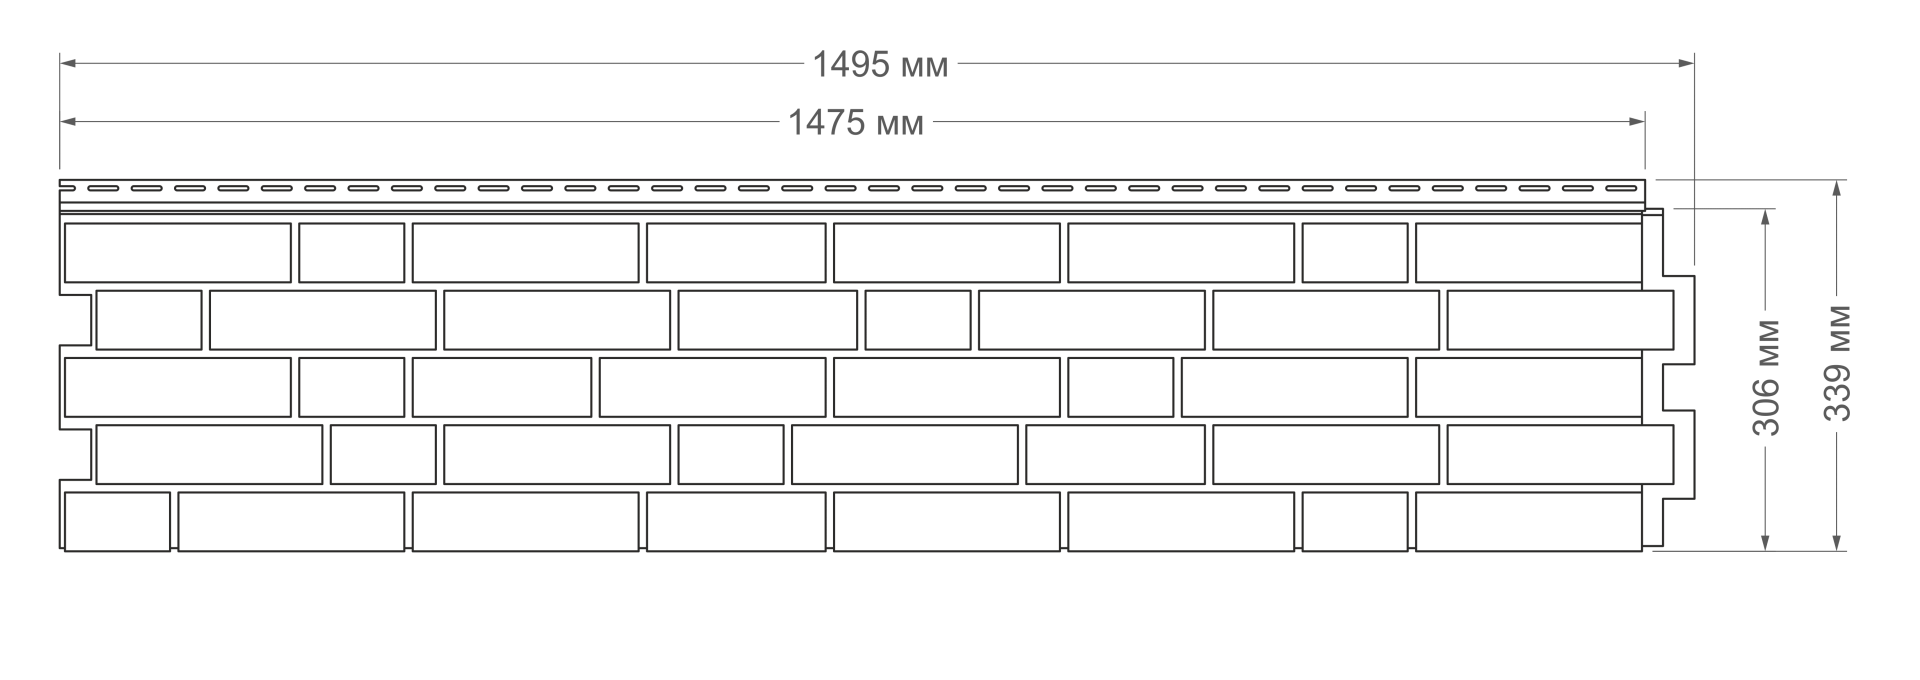 demidov_brick_front_panel